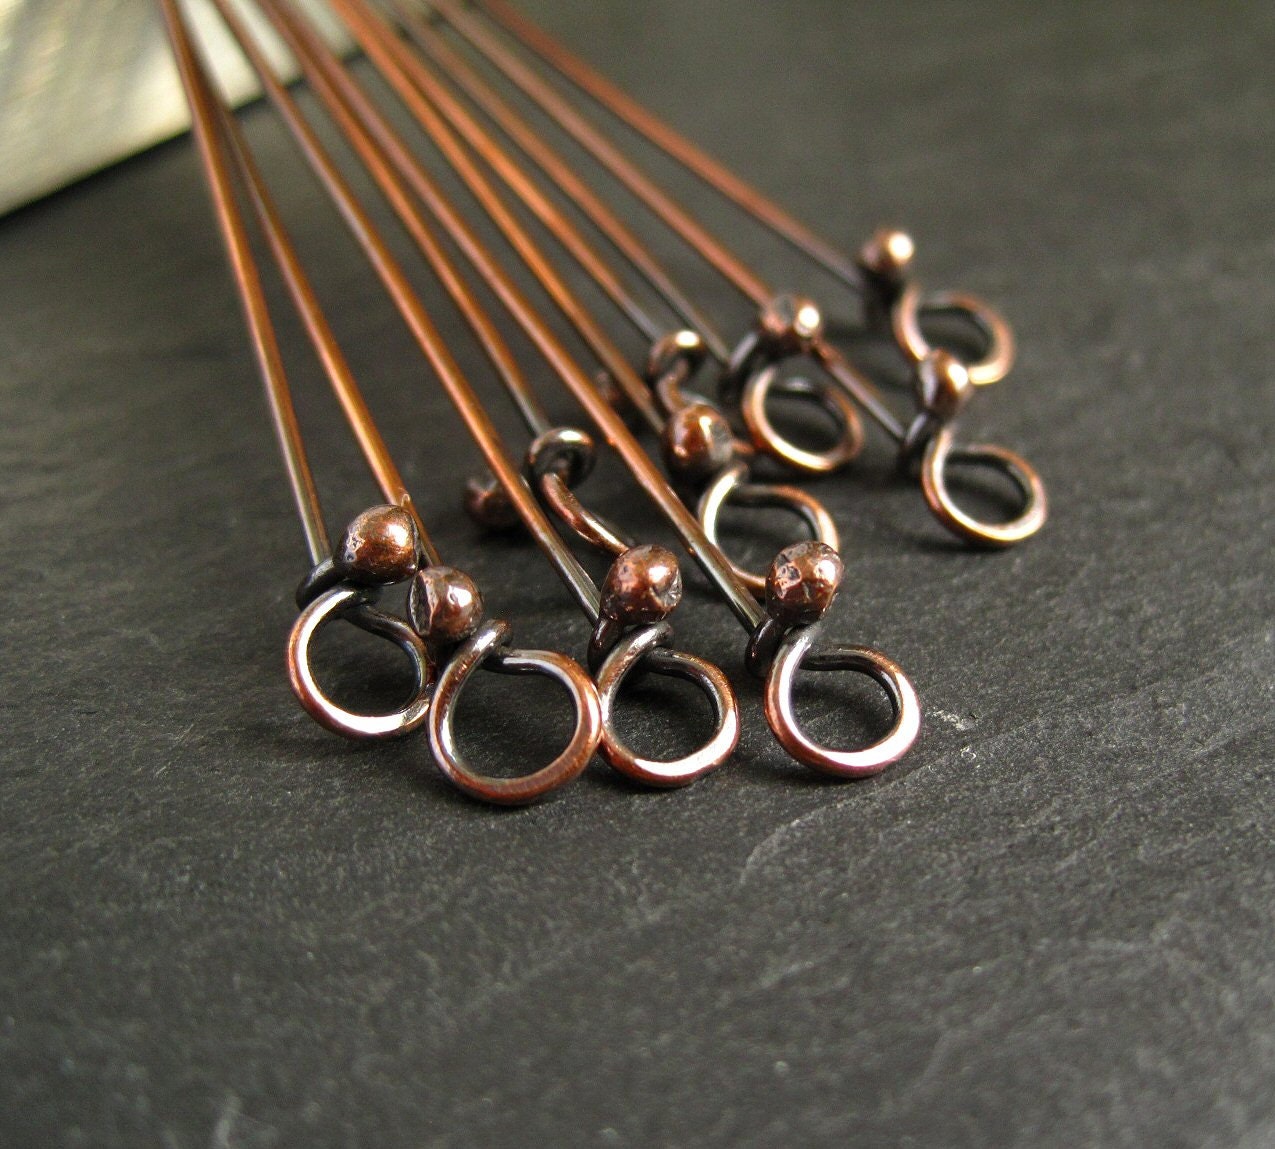 Rustic Copper Headpins with Loop, Oxidized Copper Eyepins, Handmade Jewelry Findings x 10 - CinnamonJewellery